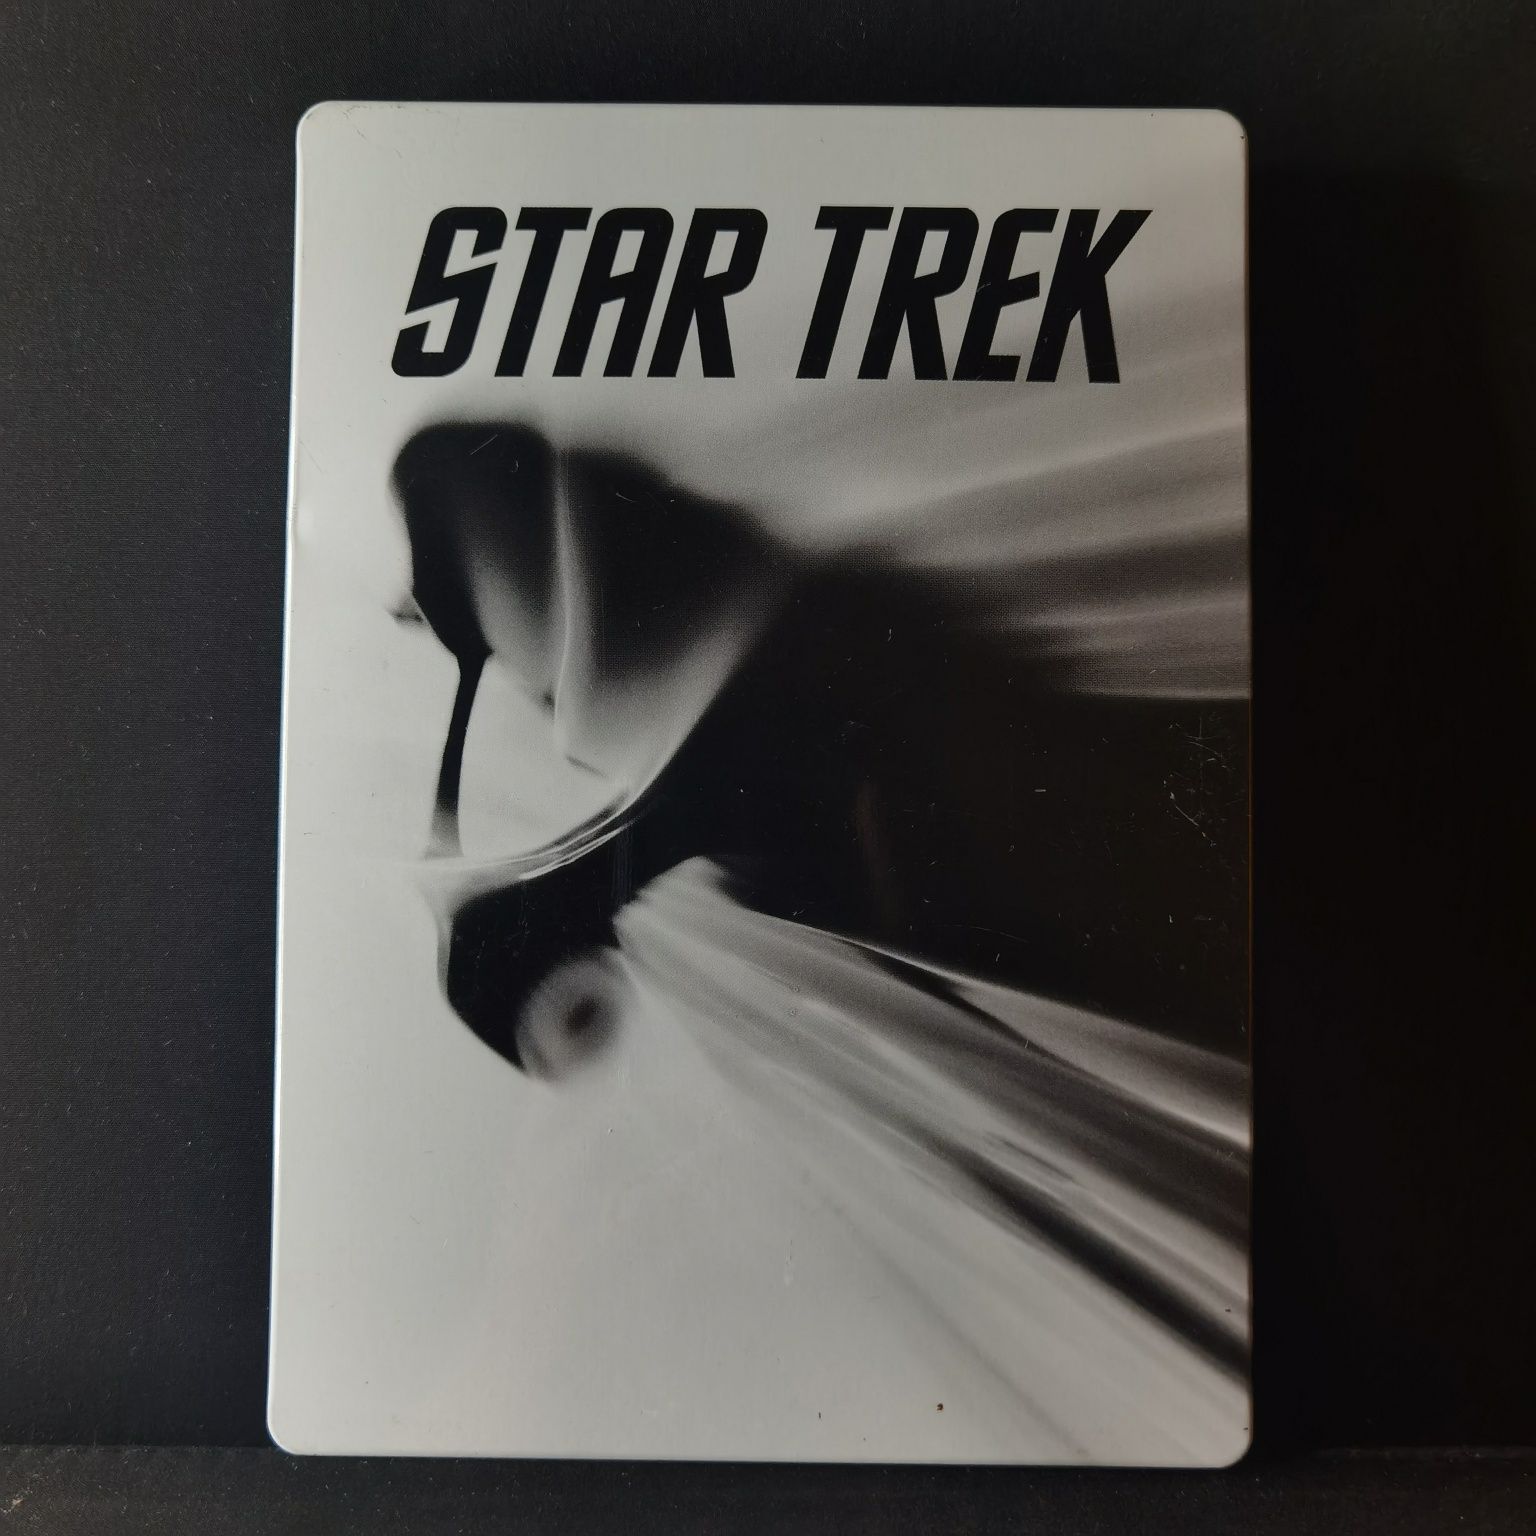 Star Trek Steelbool dvd